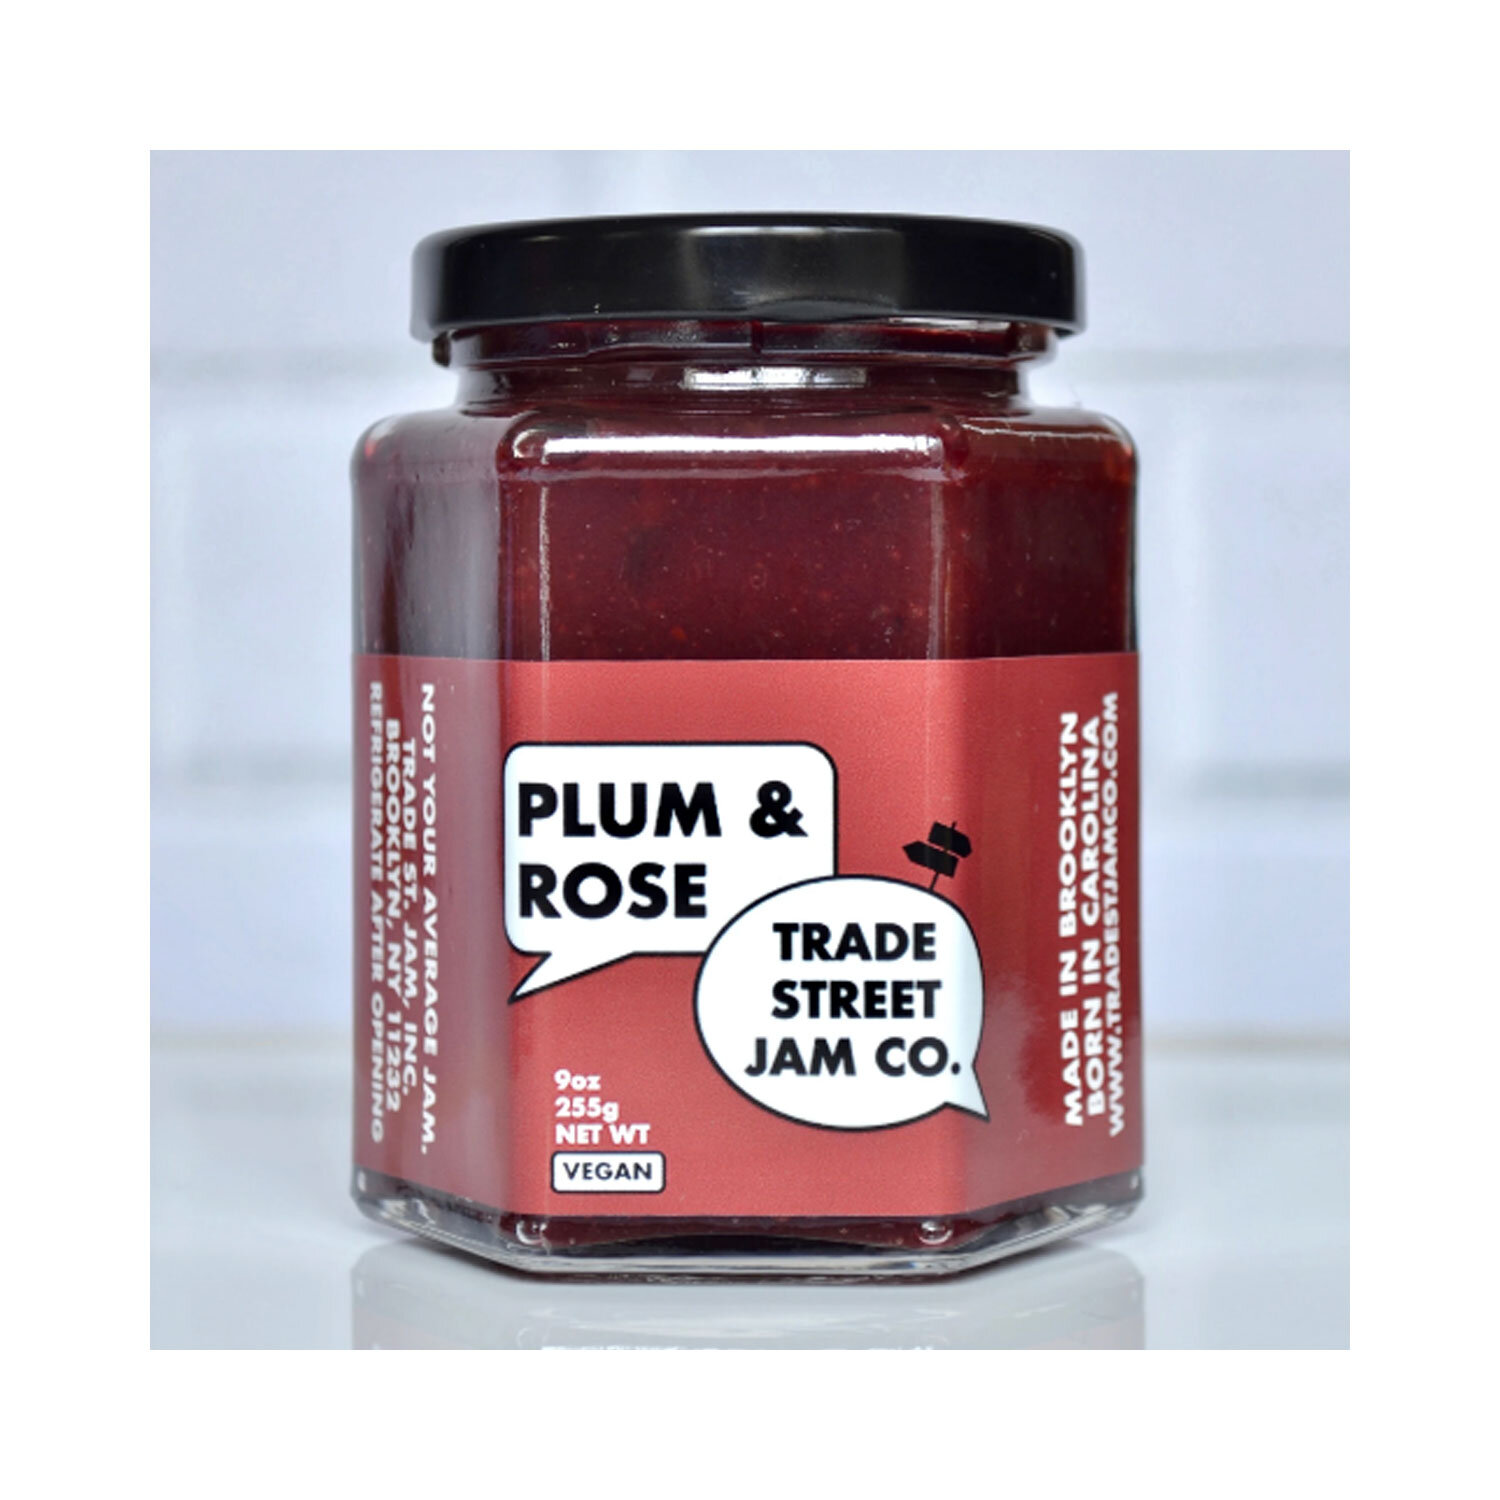 Plum &amp; Rose Jam by Trade Street Jam Co.